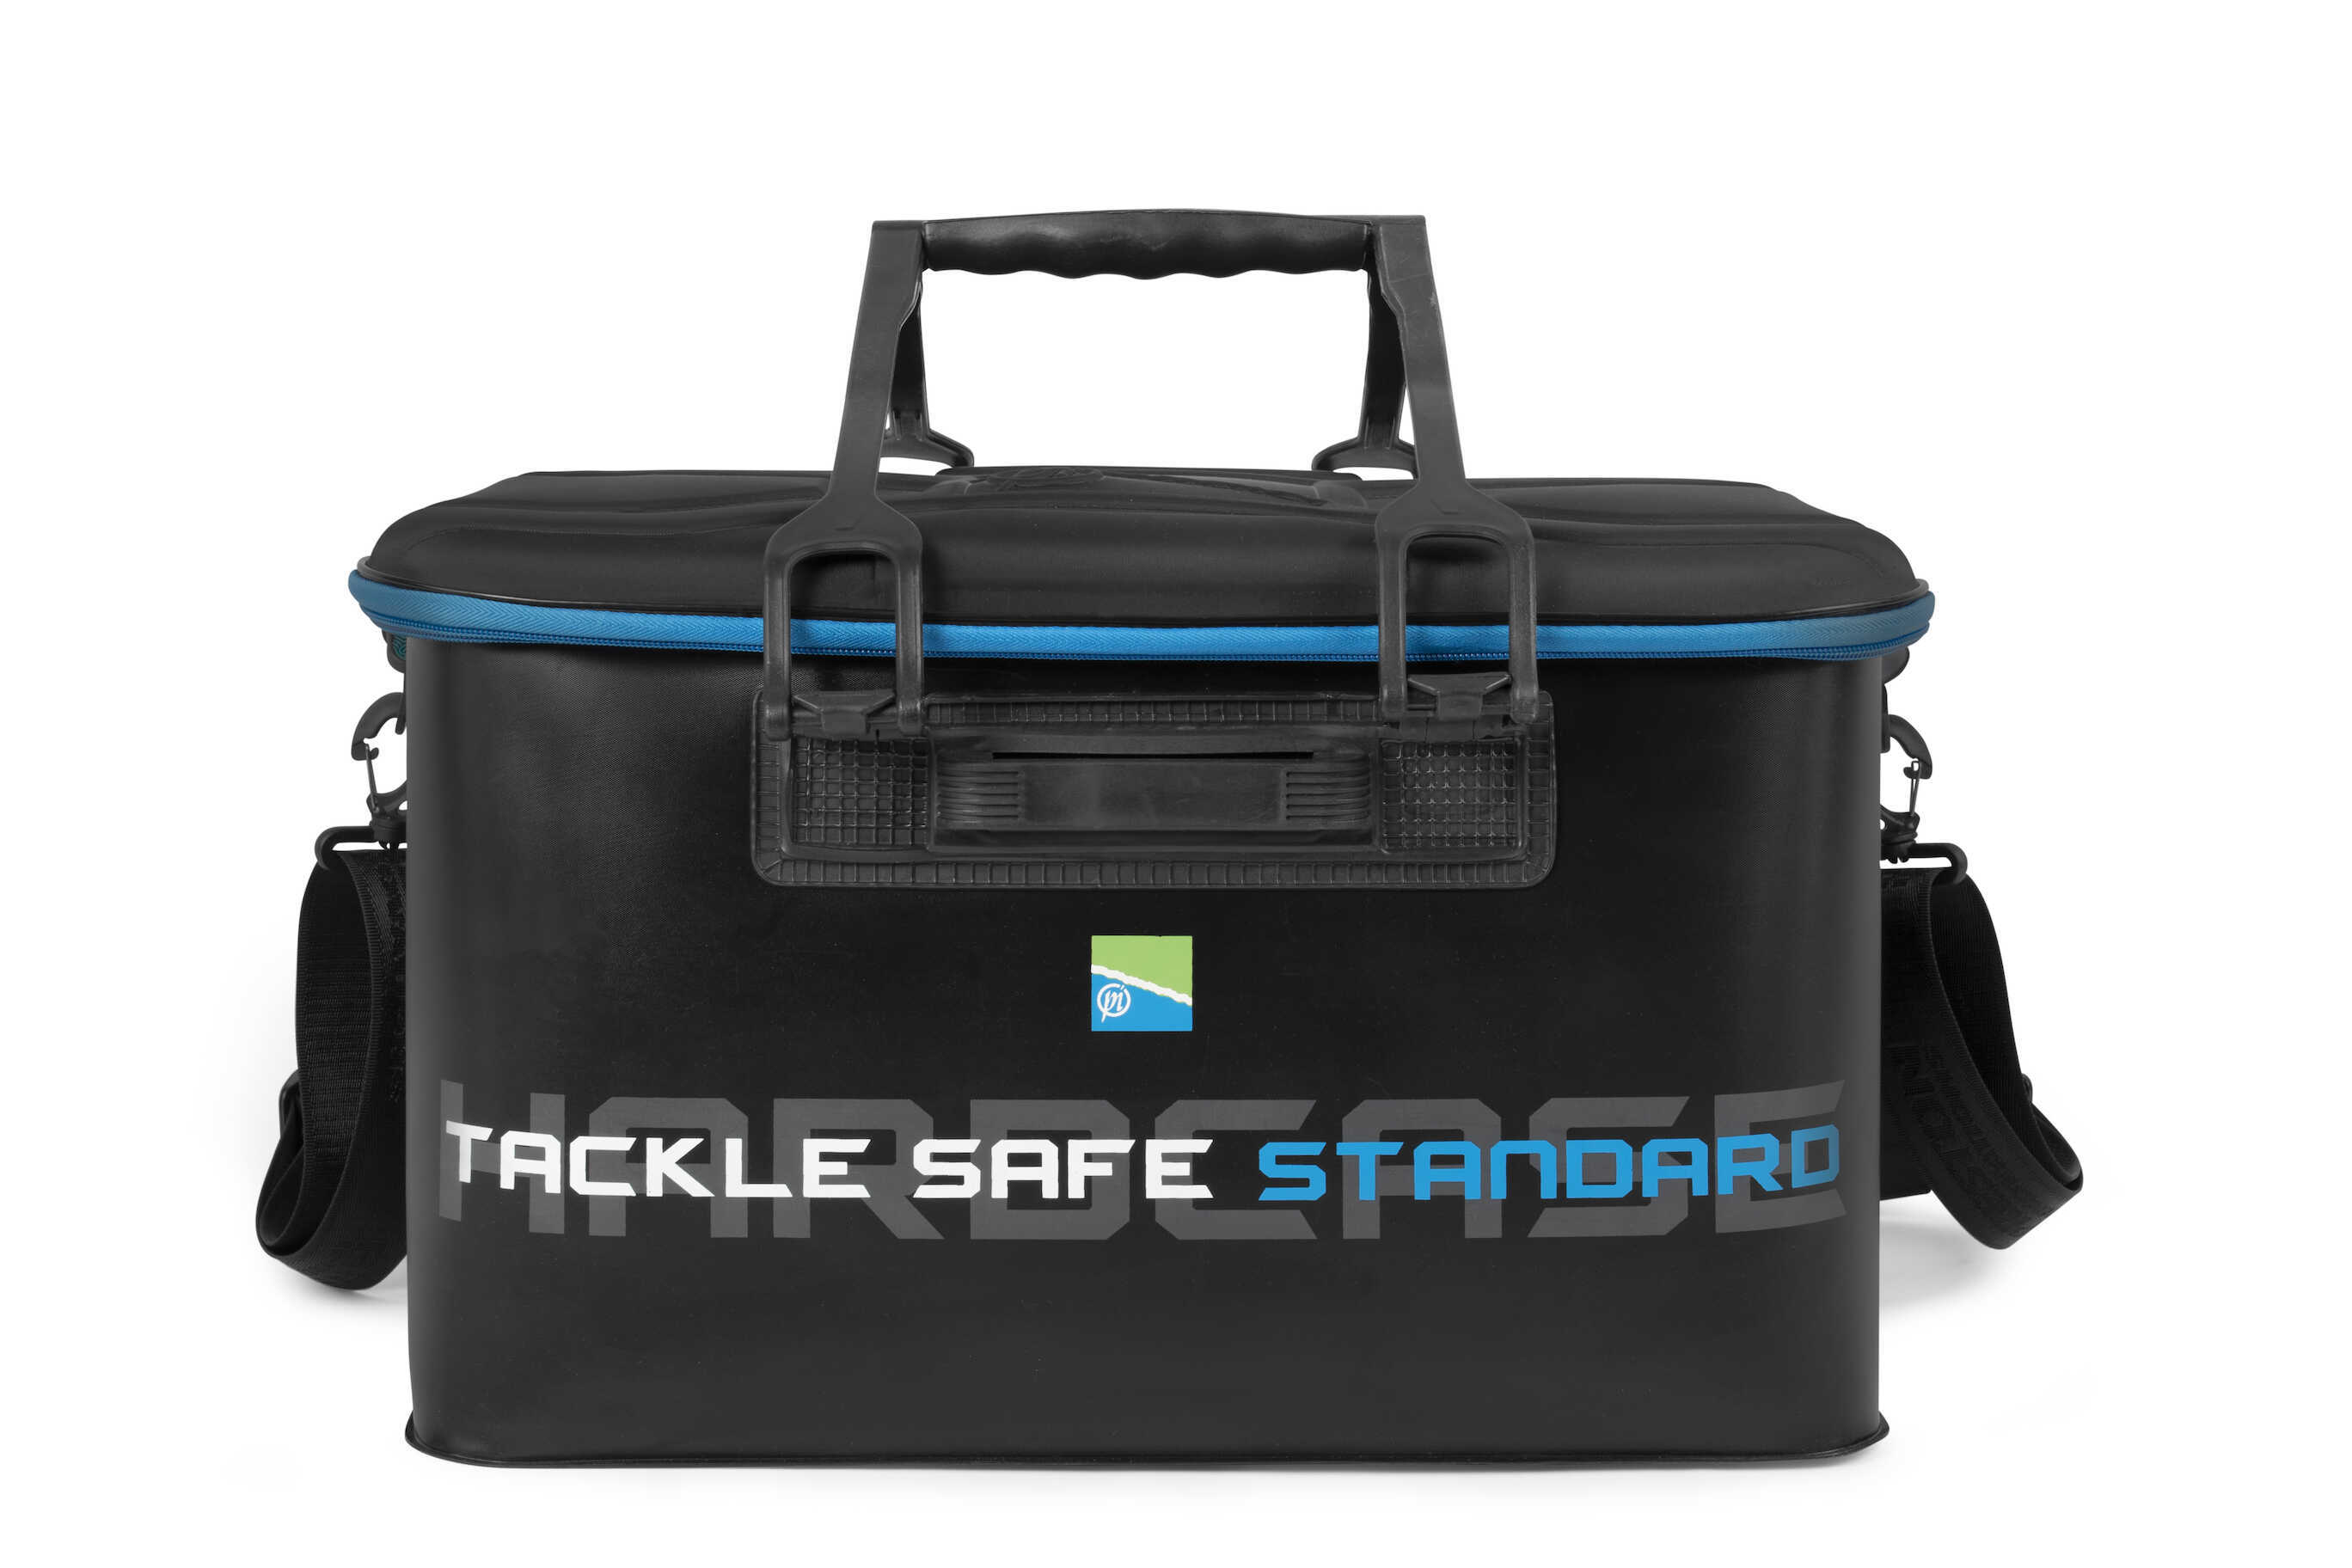 Preston Hardcase Tackle Safe